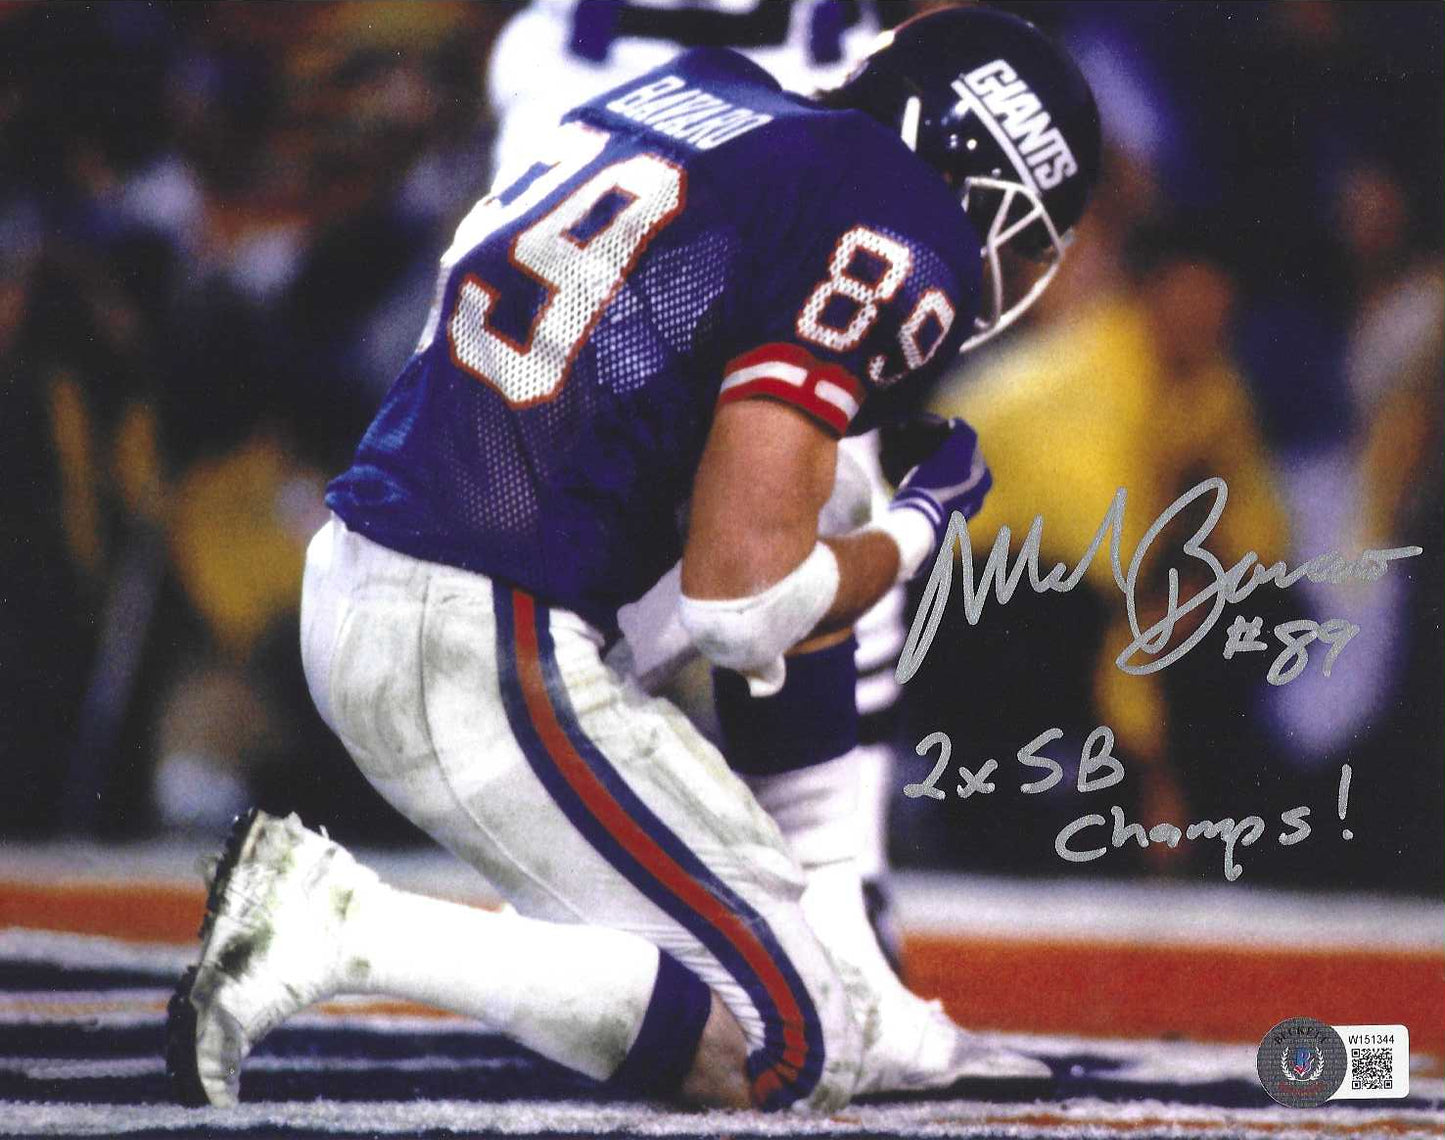 New York Giants Mark Bavaro S. B. 21 Endzone Celebration 8x10 Autographed Photo Picture Inscribed"2 X S. B. Chasmps"